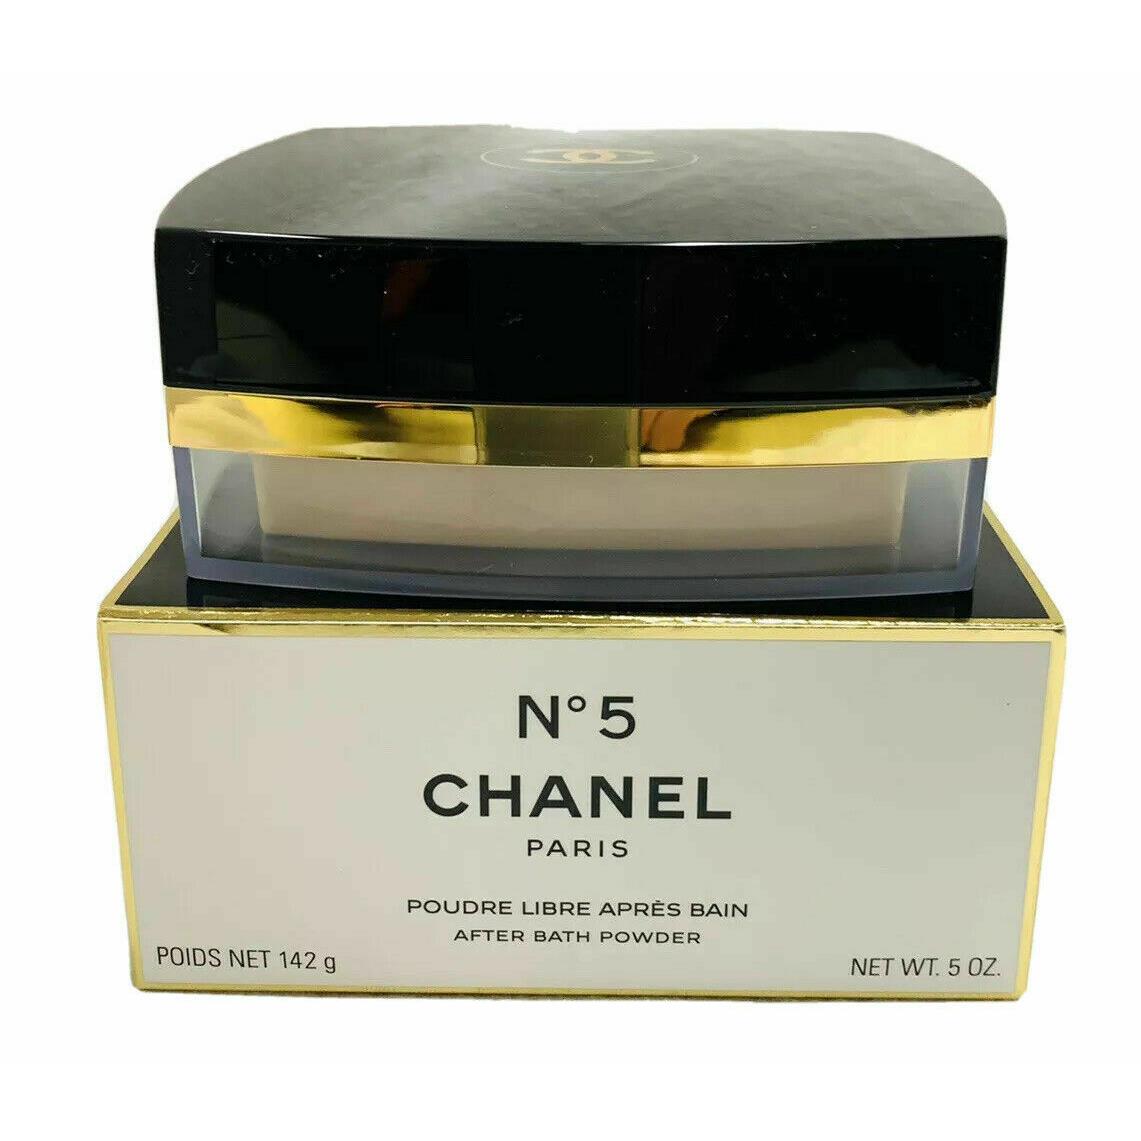 Chanel No 5 After Bath Body Powder 5oz Read Description Please Fragrance